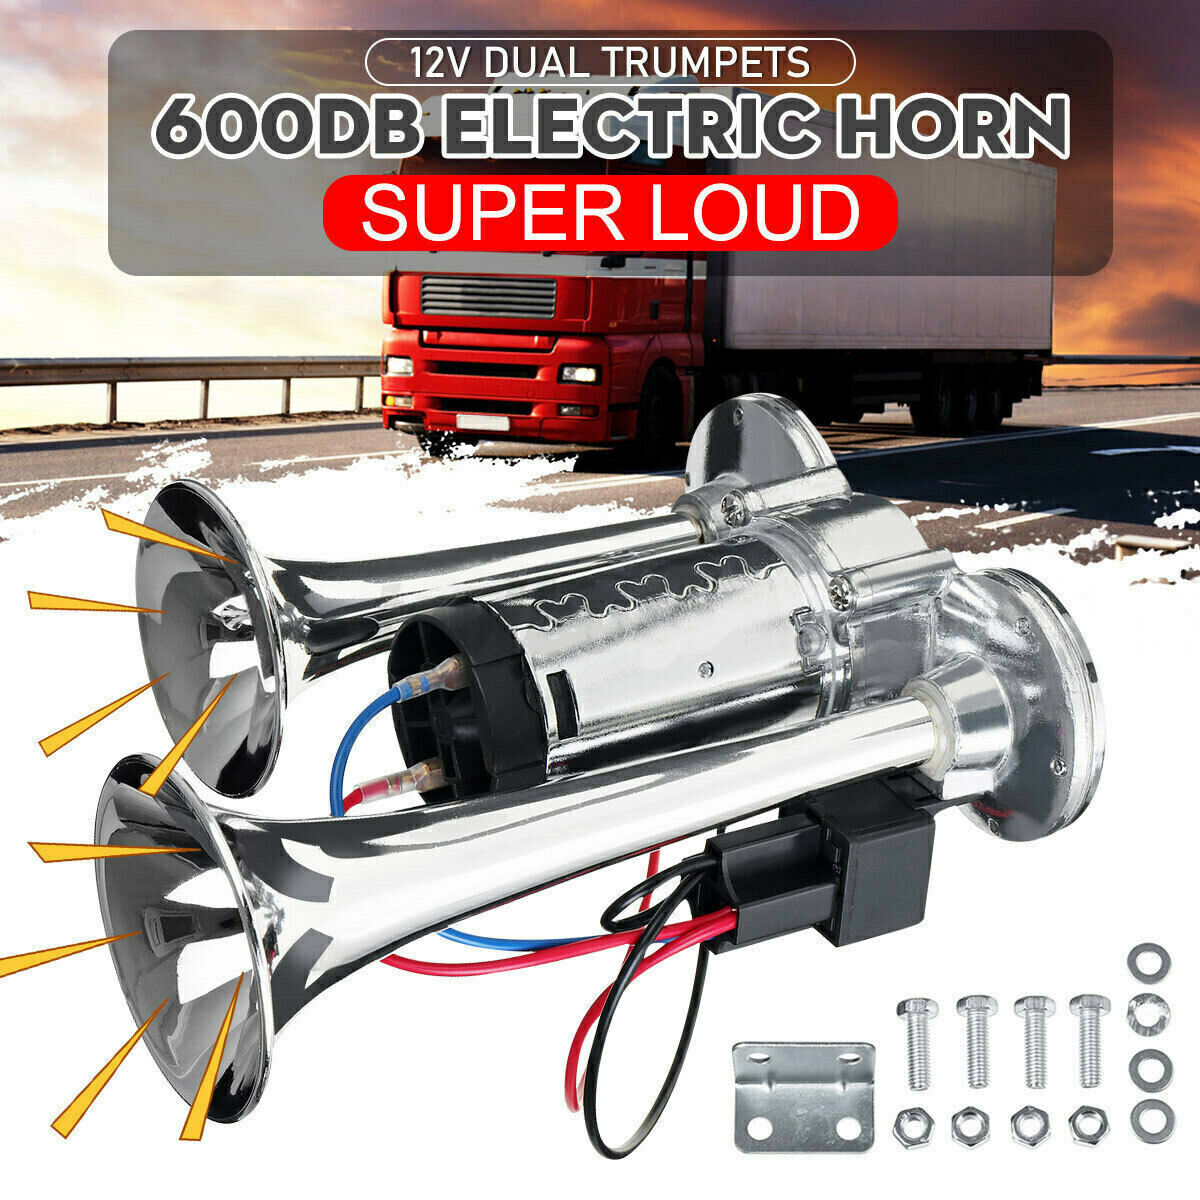 1x Super Loud Train Electric Air Horn 600DB Dual Trumpets Car,Truck,Boat Speaker